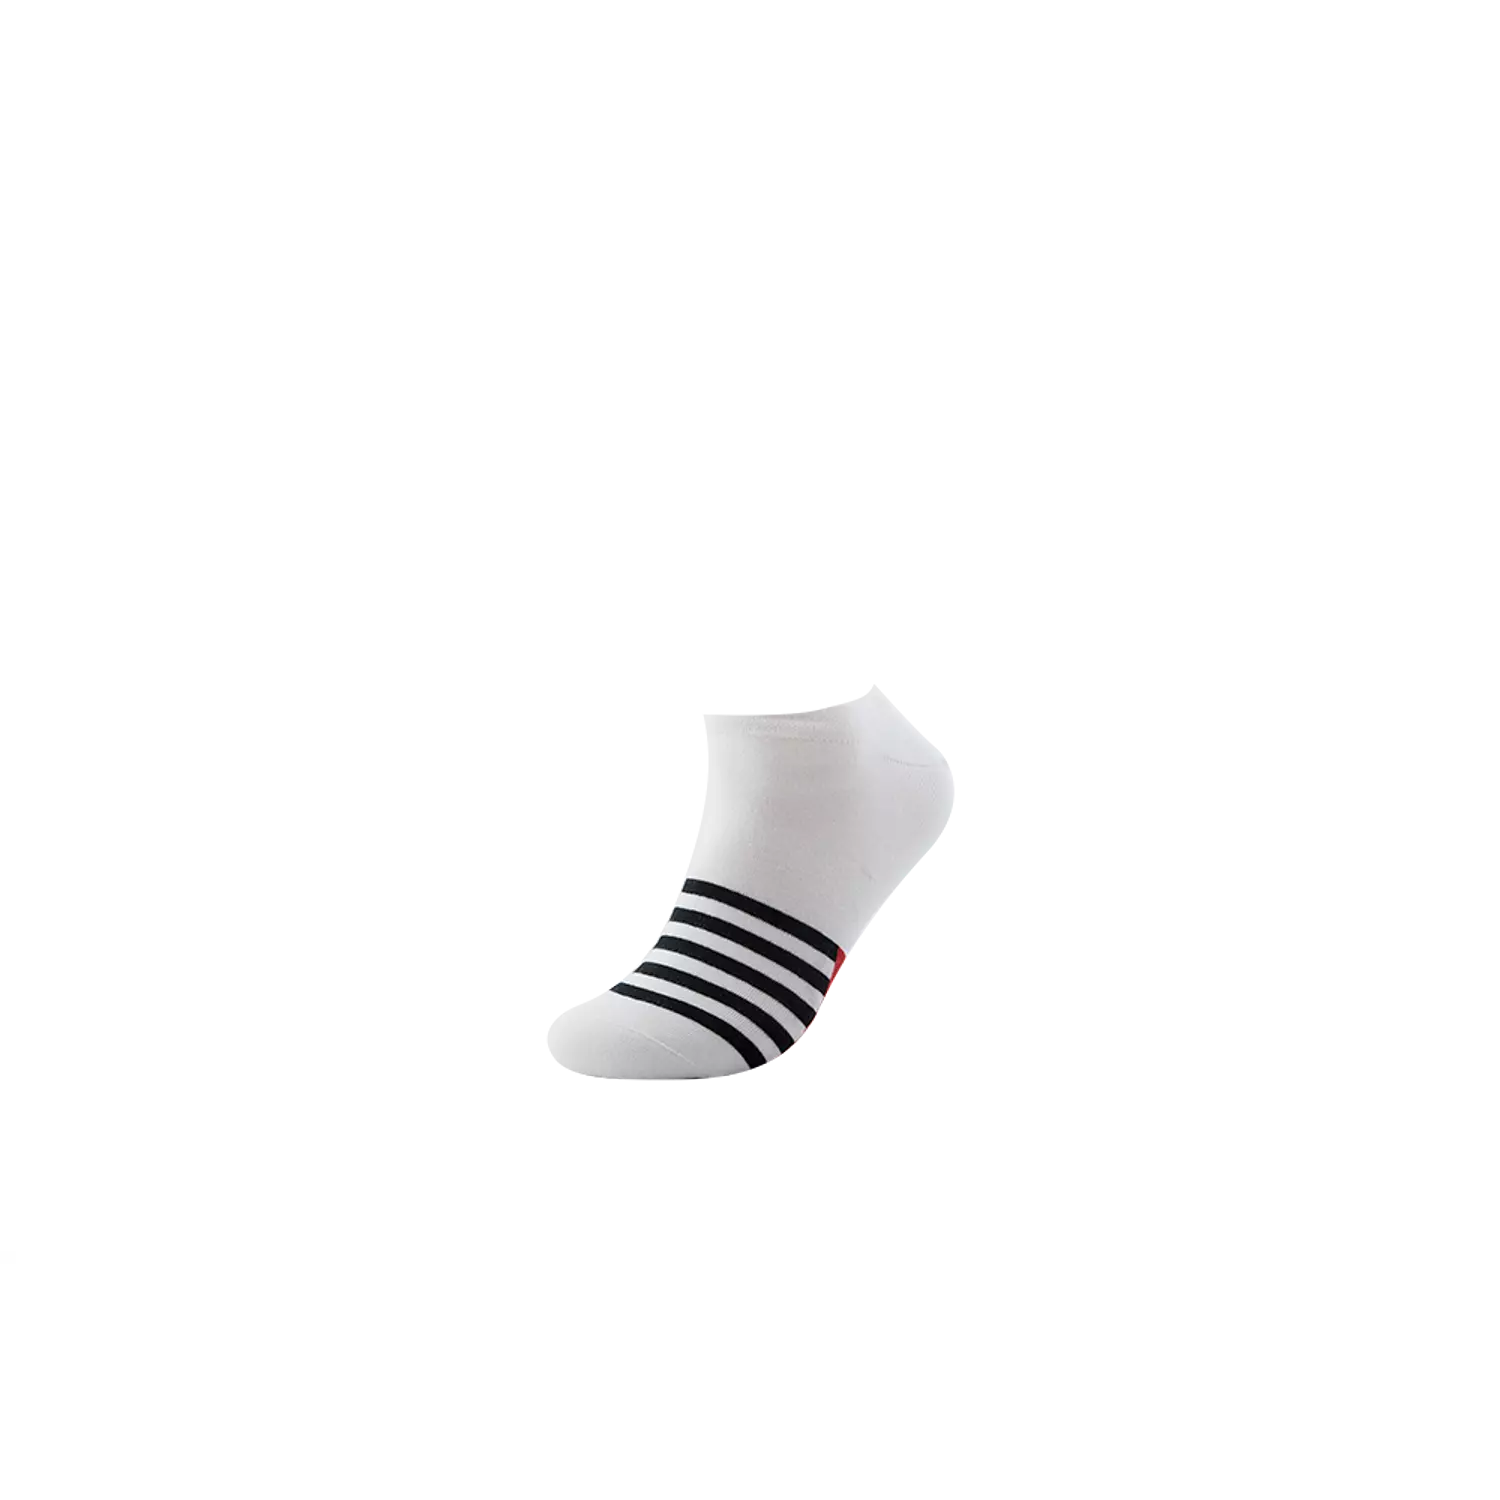 Viva Lowcut casual Socks for men's hover image